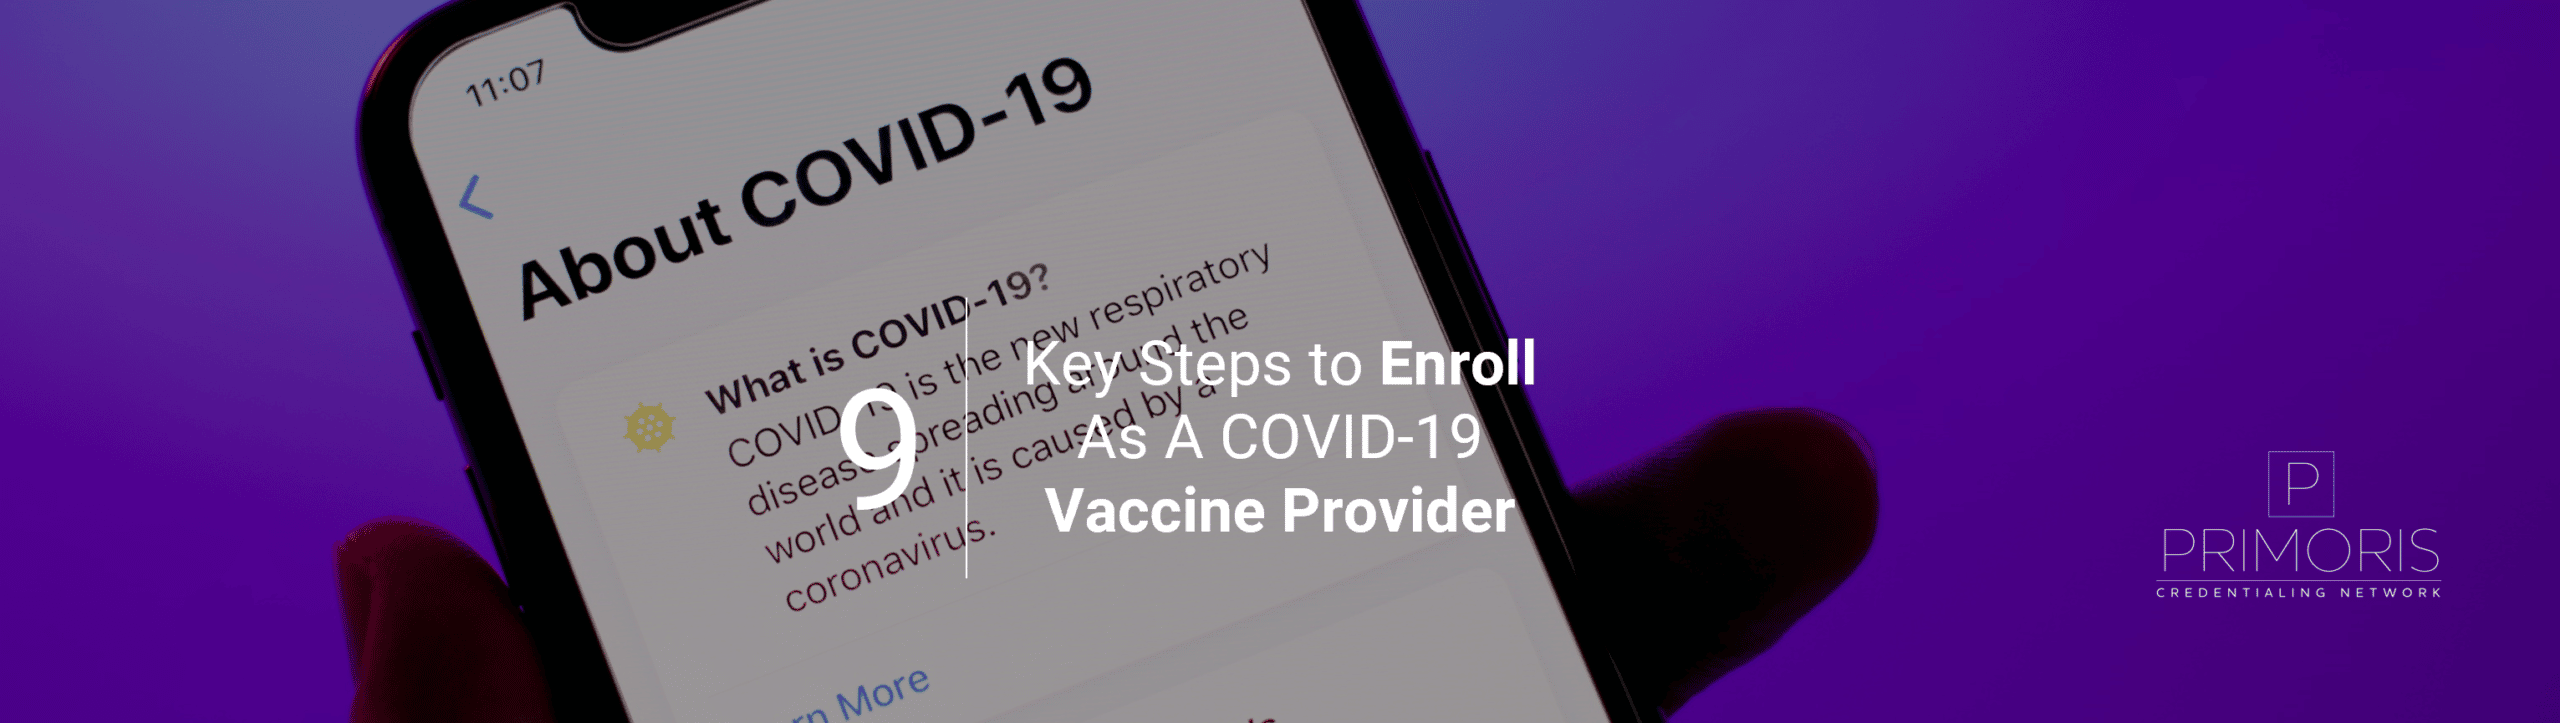 9 Steps To Enroll As A Covid-19 Vaccine Provider